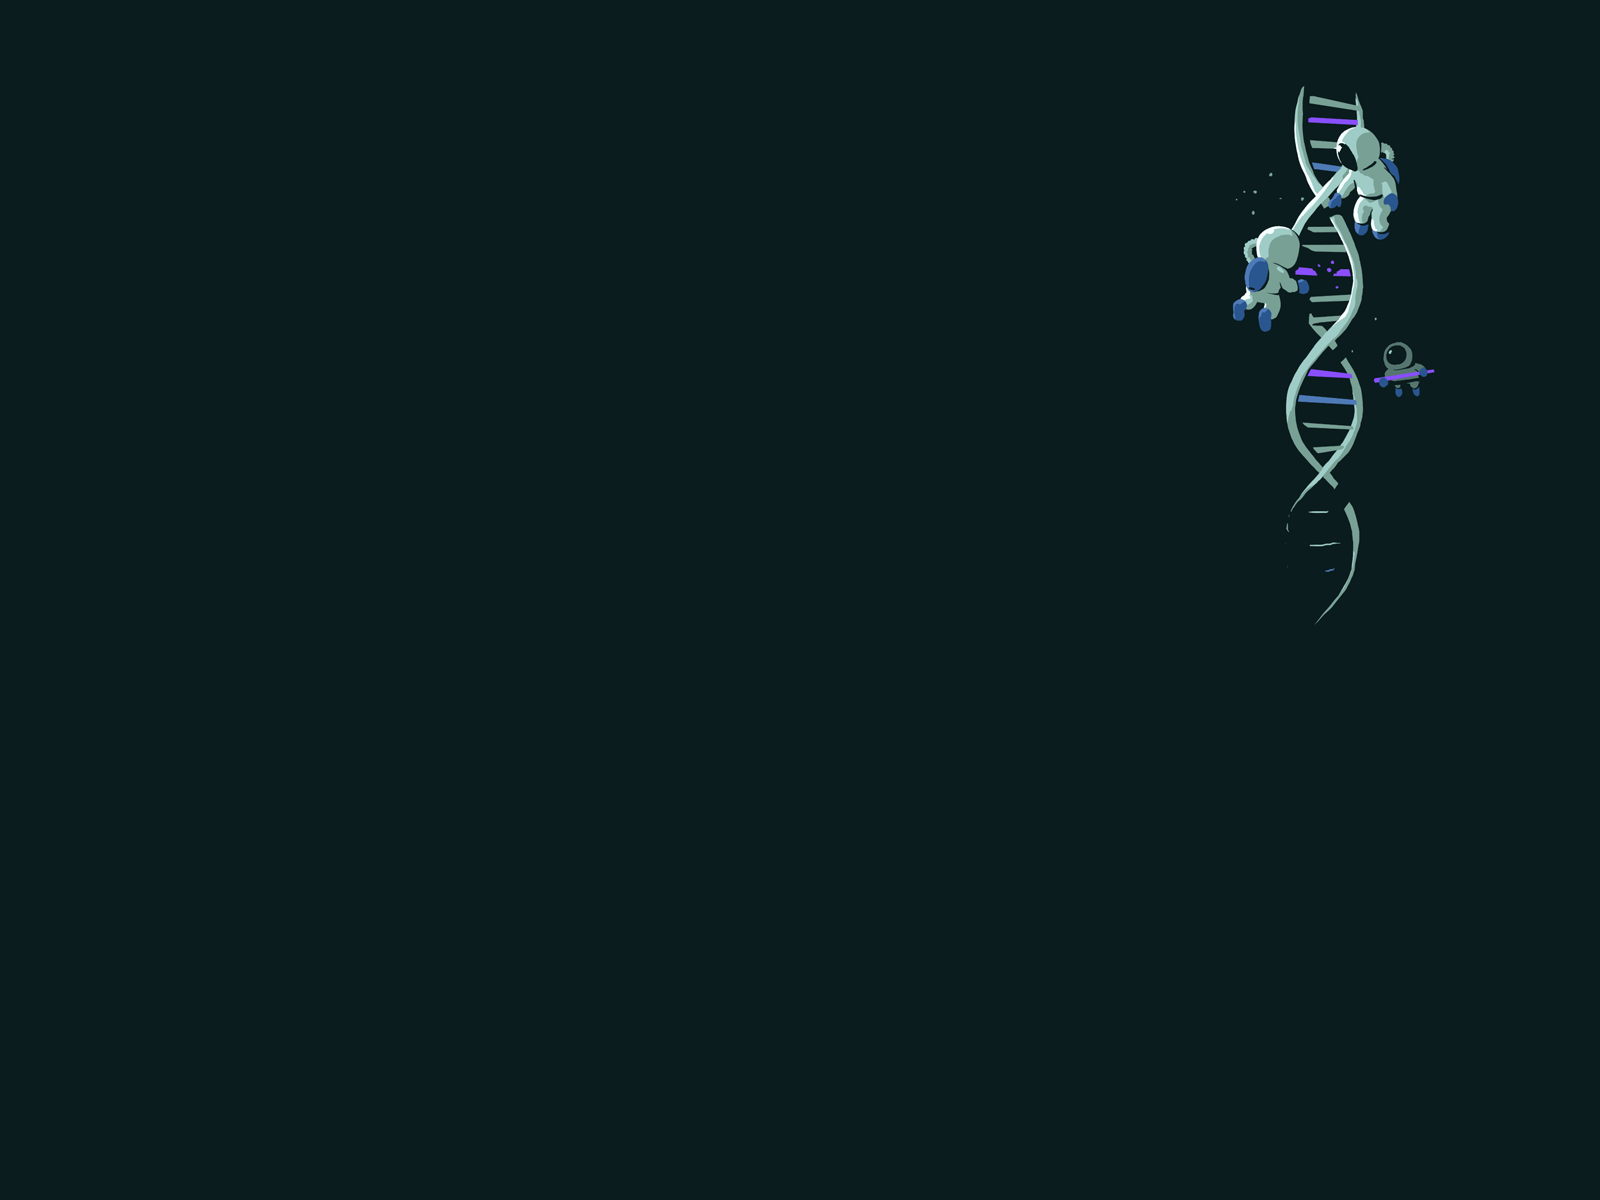 Fondos de pantalla de ADN - FondosMil